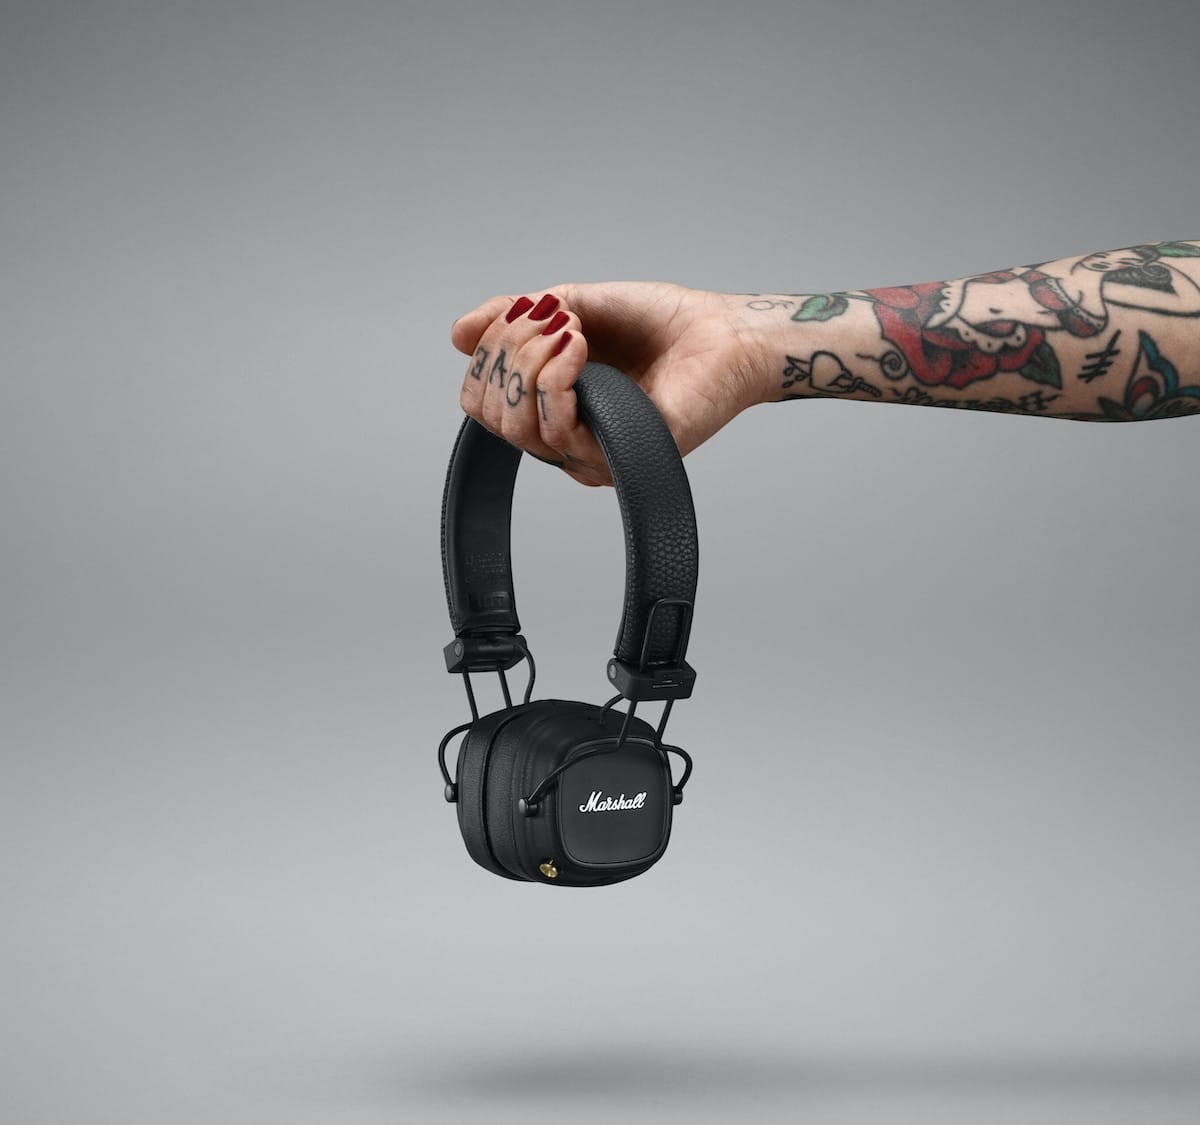 Marshall Major IV iconic headphones provide 80 hours of play